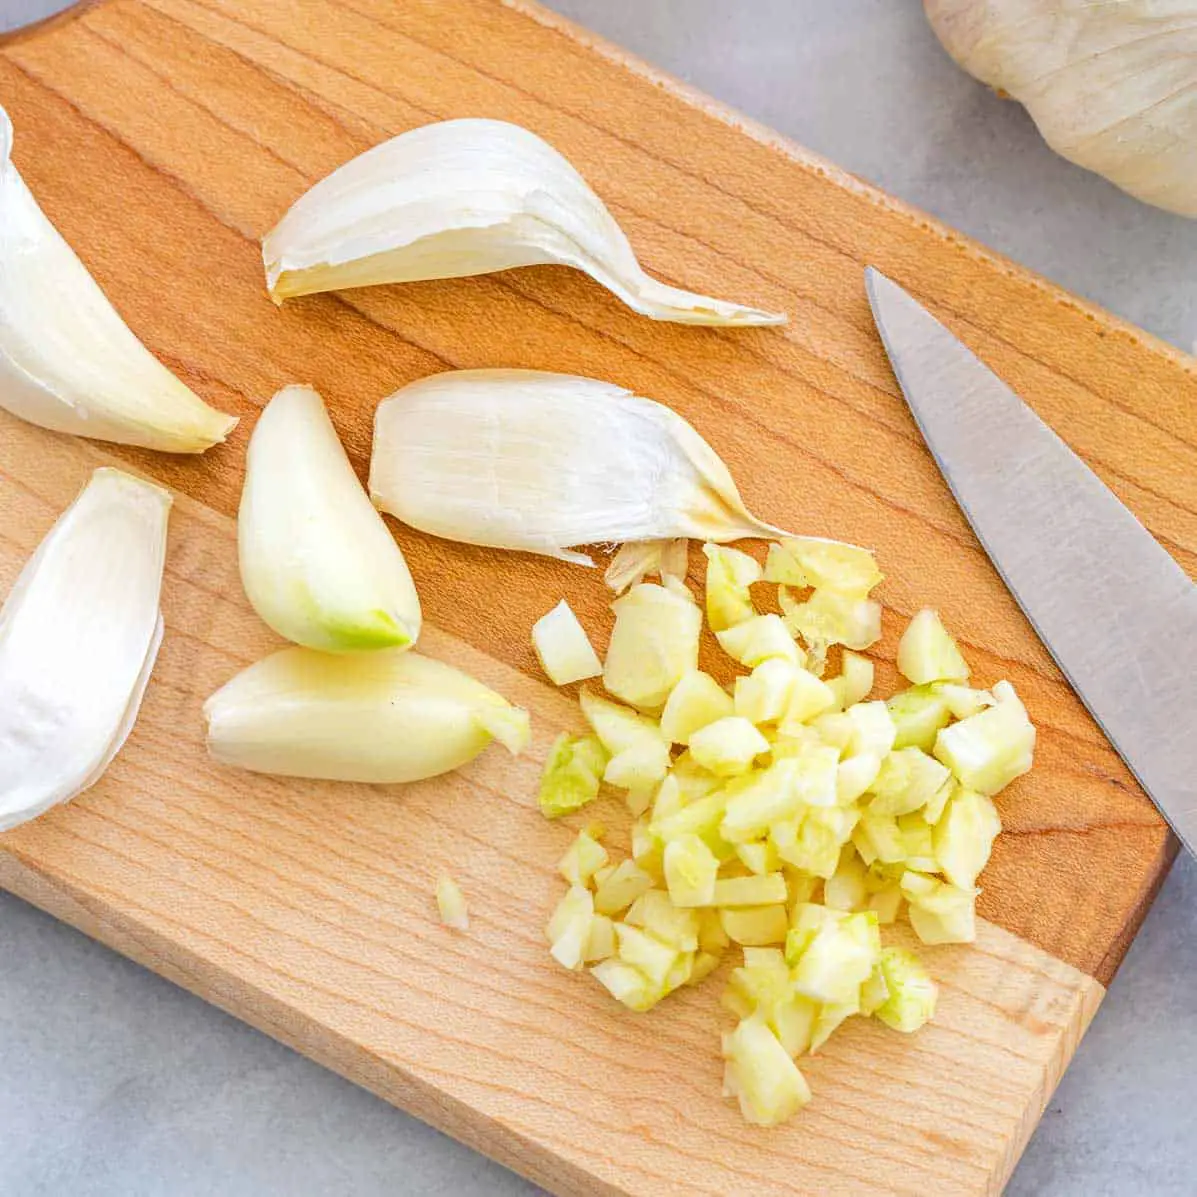 How long does garlic last in the fridge?